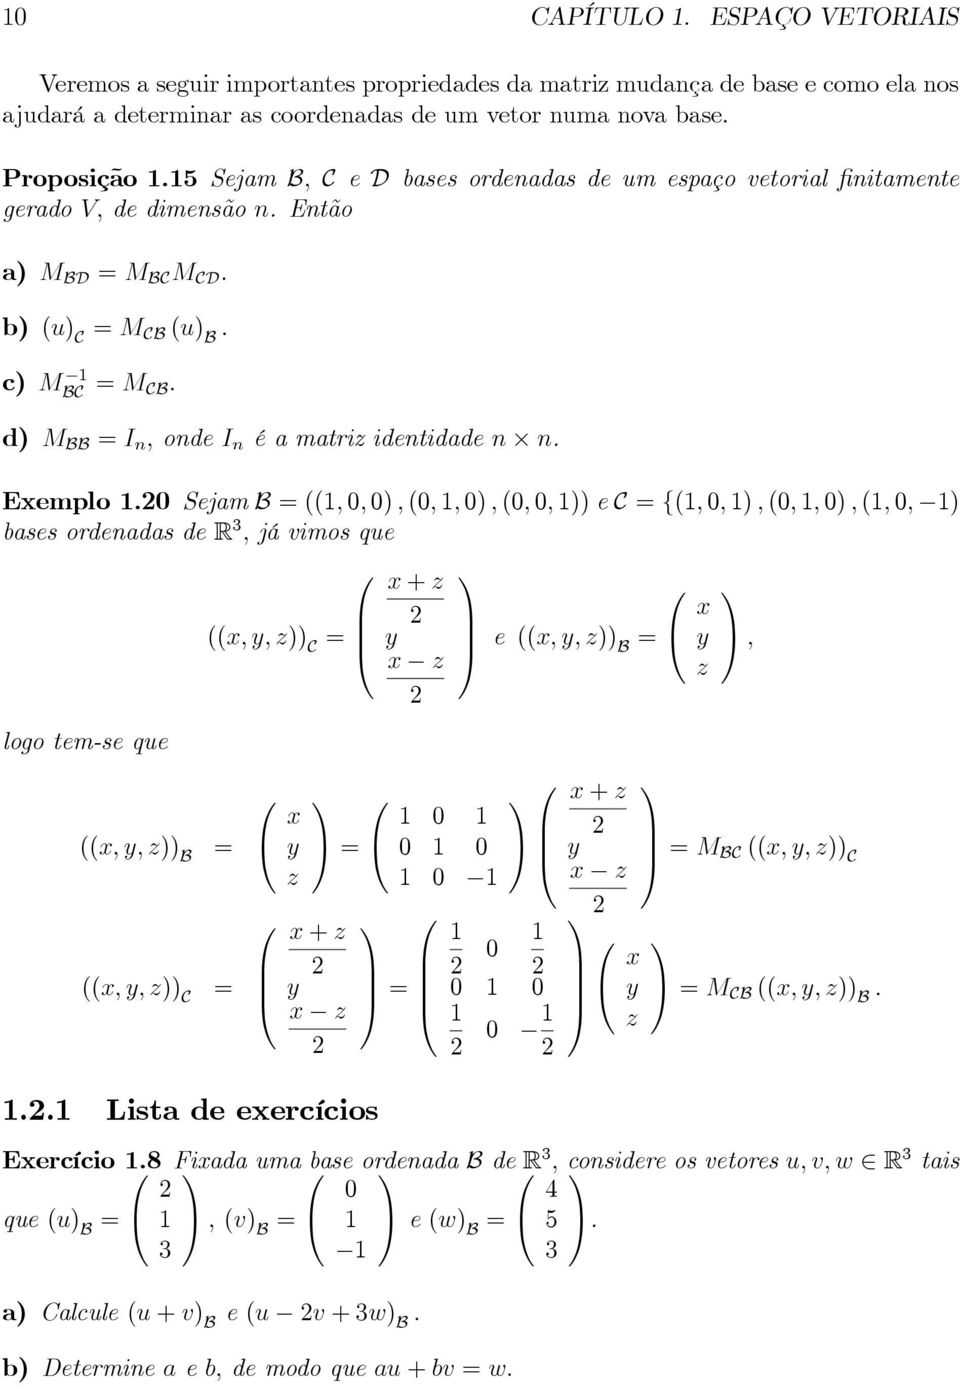 SejamB((,0,0),(0,,0),(0,0,))eC{(,0,),(0,,0),(,0, ) basesordenadasder 3,jávimosque logo tem-se que ((x,y,z)) B ((x,y,z)) C ((x,y,z)) C x y z x+z y x z x+z y x z 0 0 0 0 Lista de exercícios e ((x,y,z))